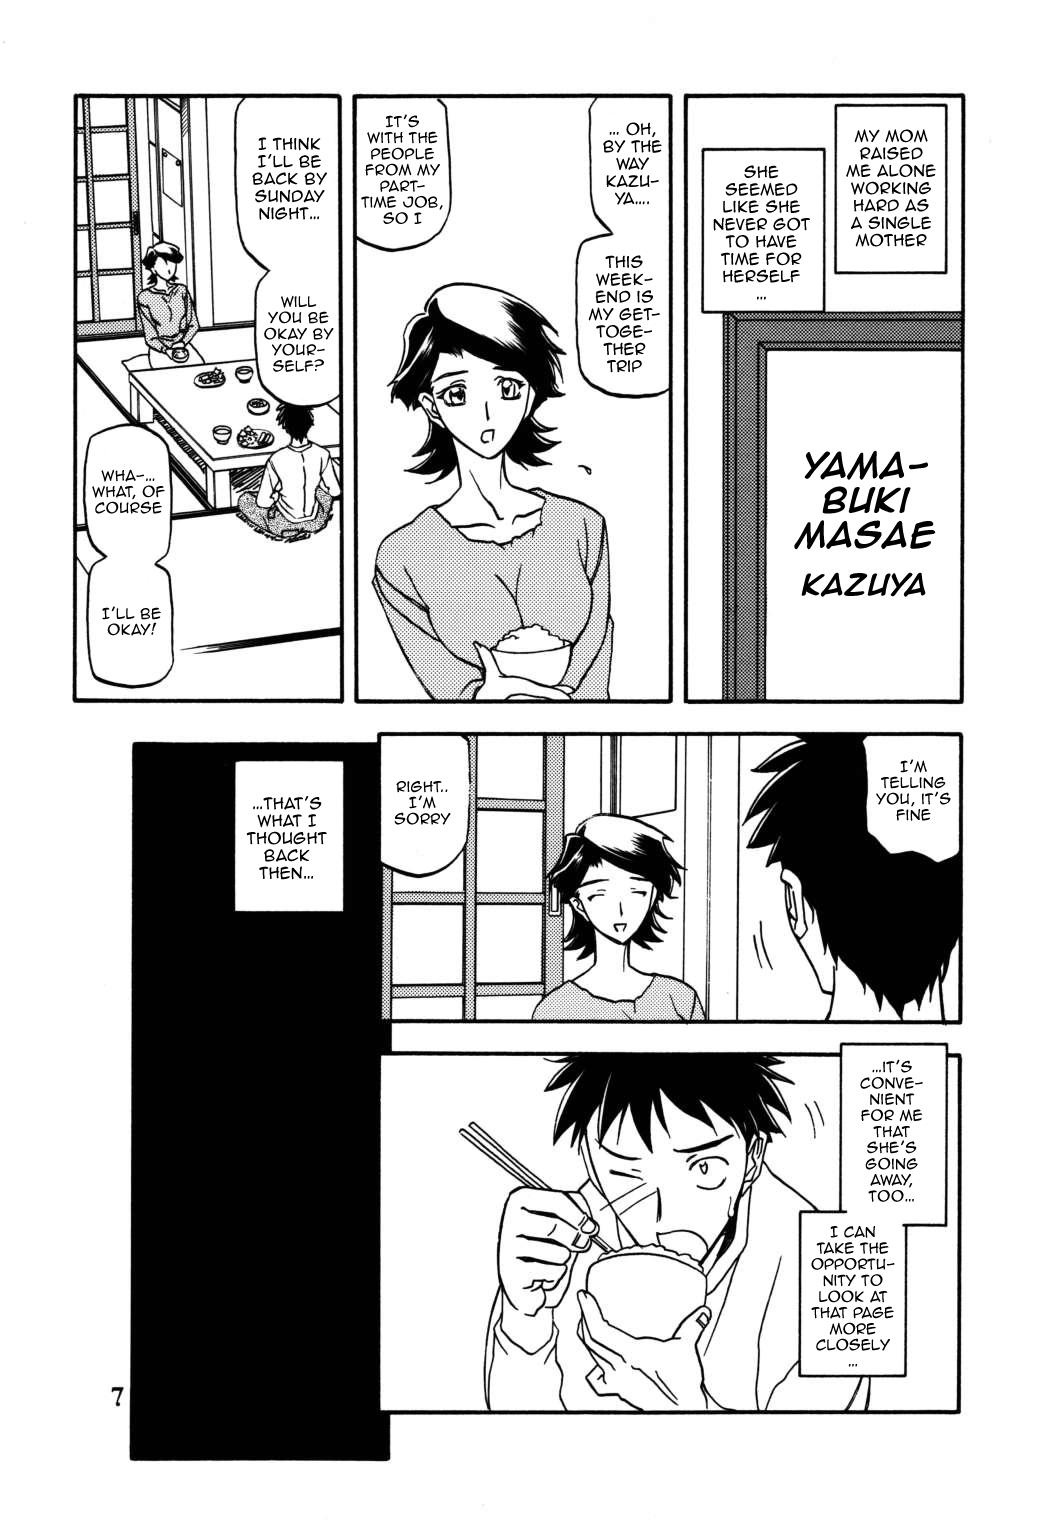 Casada Akebi no Mi - Masae - Original Tight - Page 6